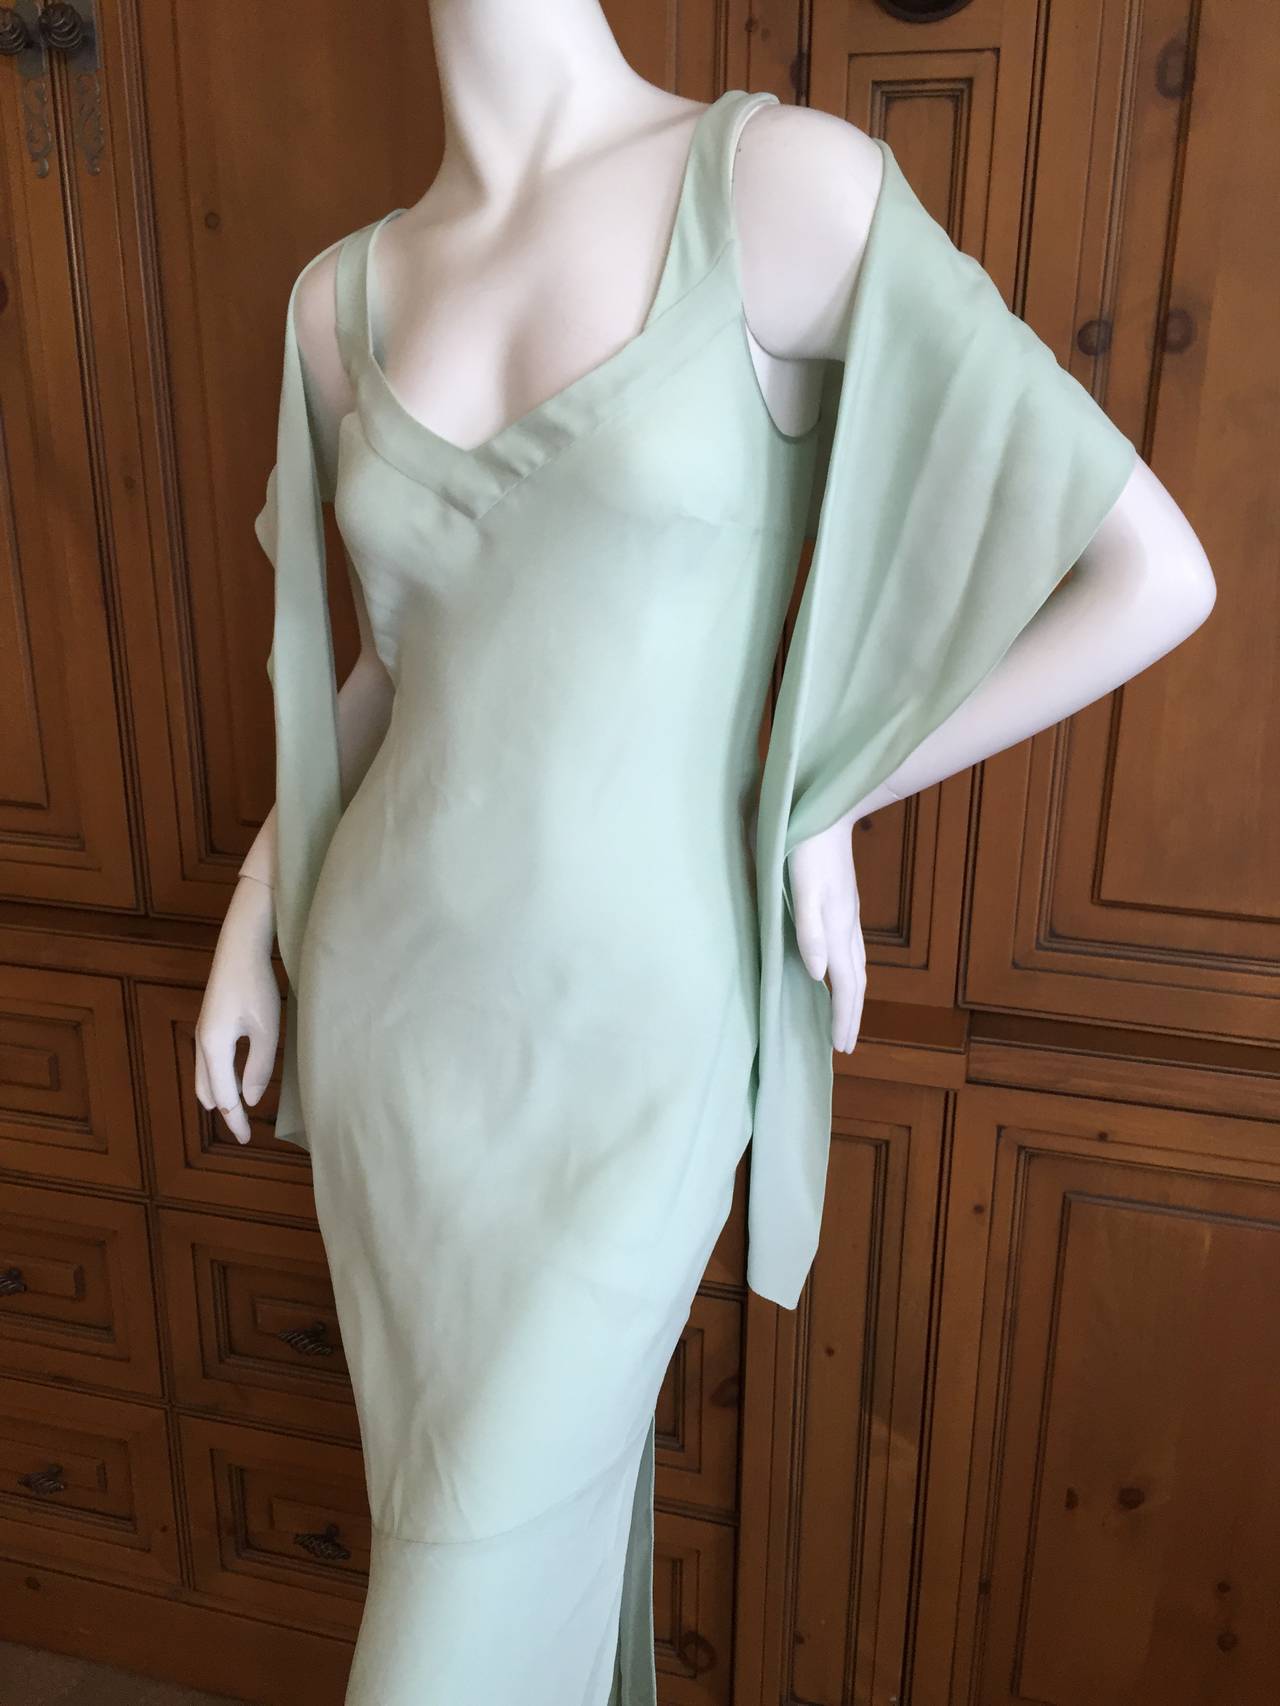 John Galliano Bias Cut Sleeveless Dress with Shawl.
Early label 1990's.
SIze 40 French, USA 8.
Bust 38